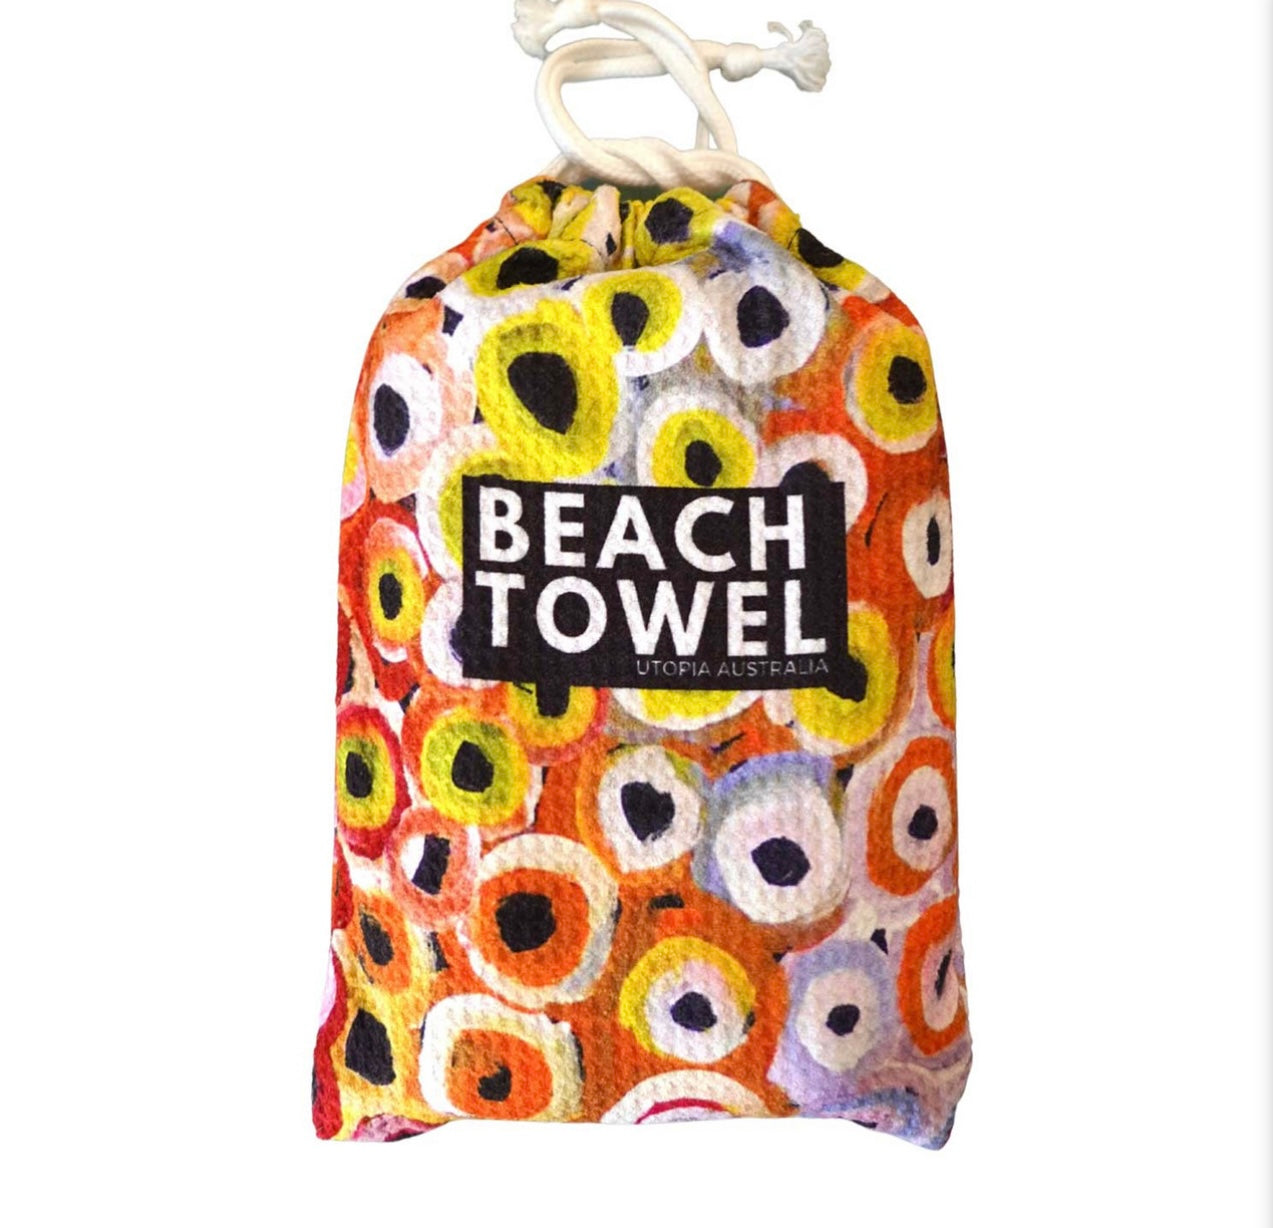 Beach Towel - Lena Pwerle - Soakage